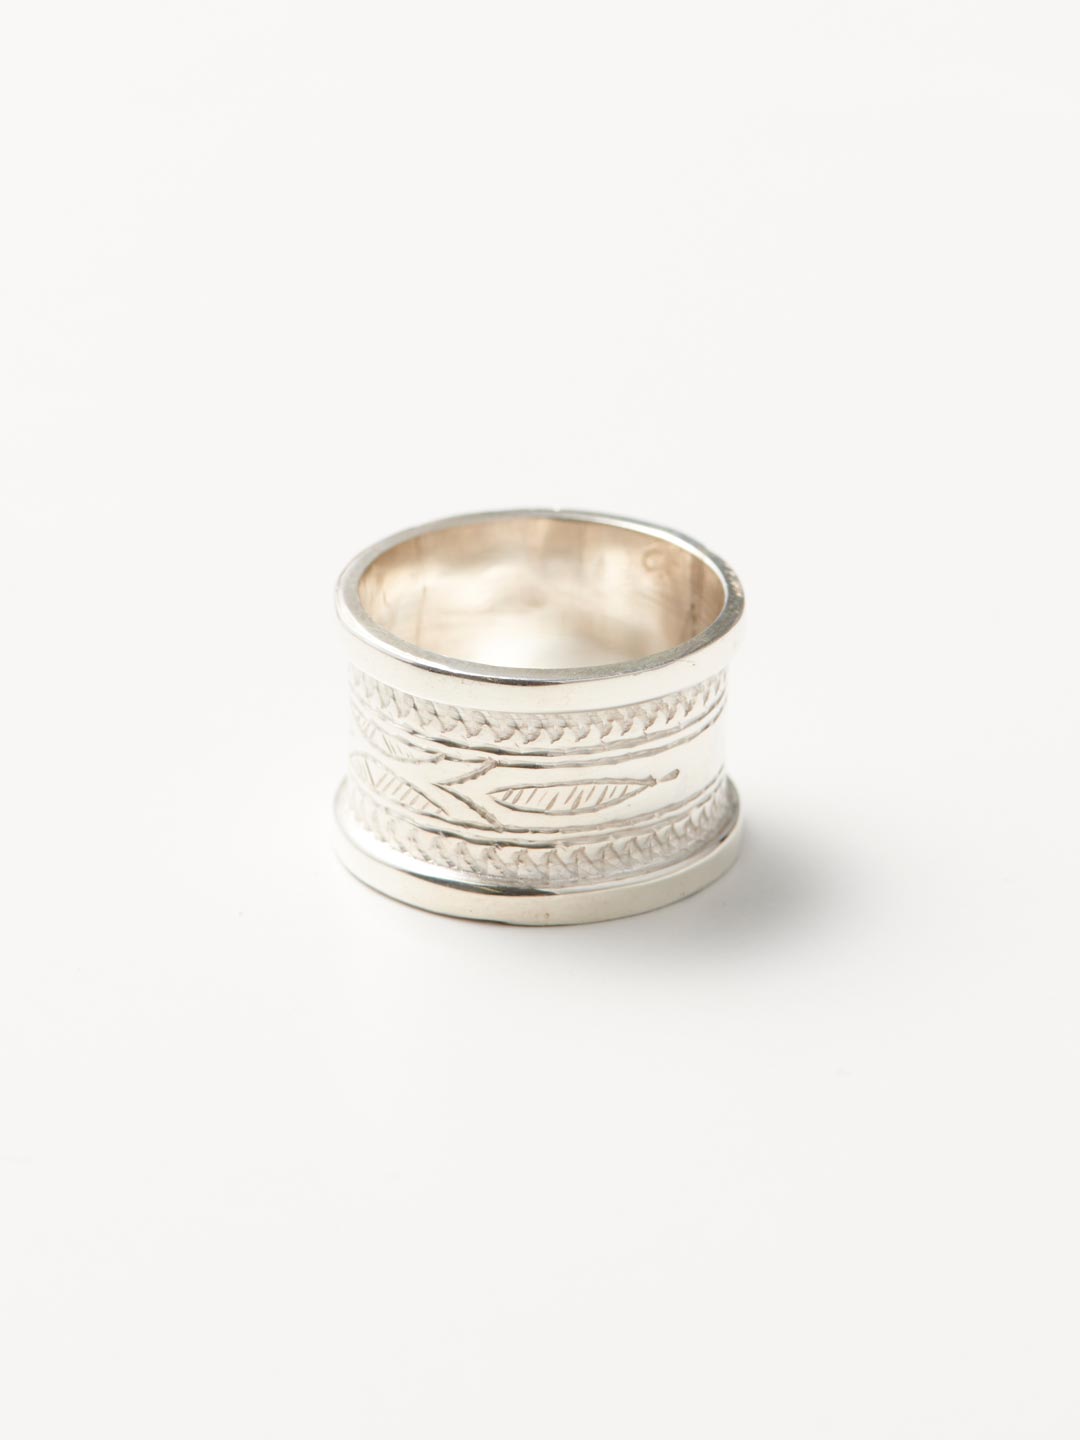 Tadqqa Tissght Ring - Silver